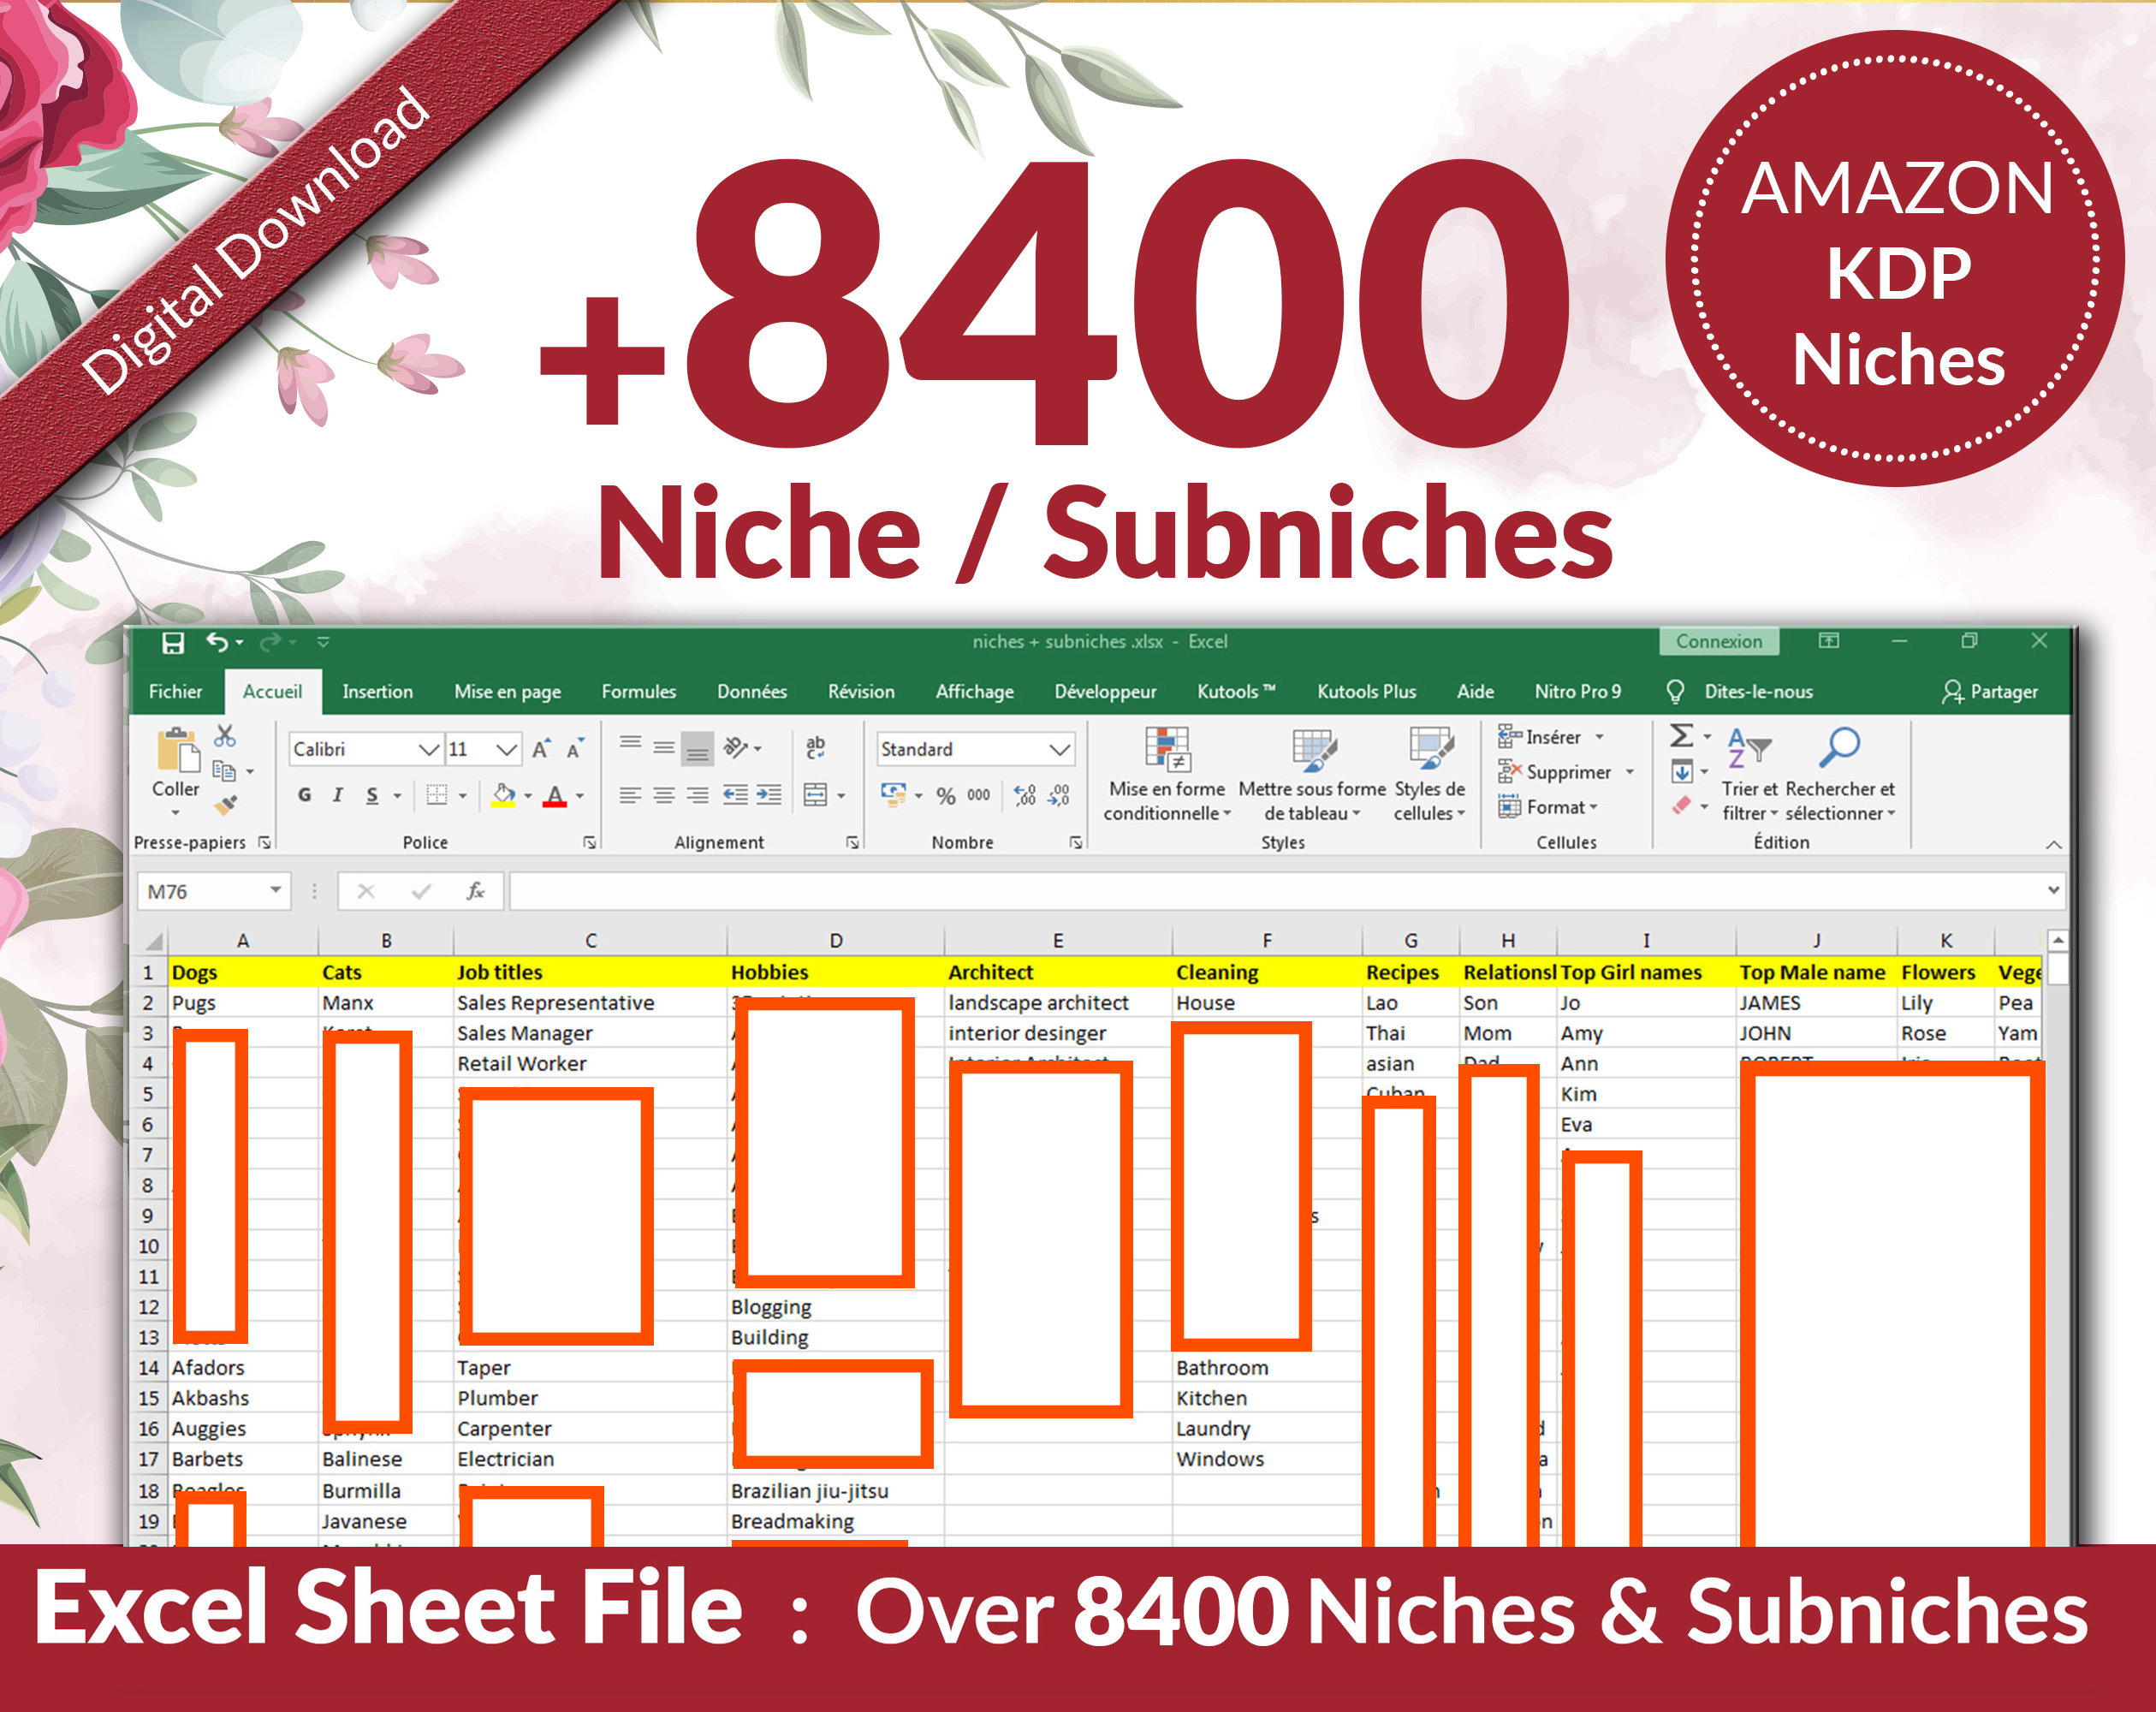 amazon-kdp-niches-8400-profitable-niches-and-sub